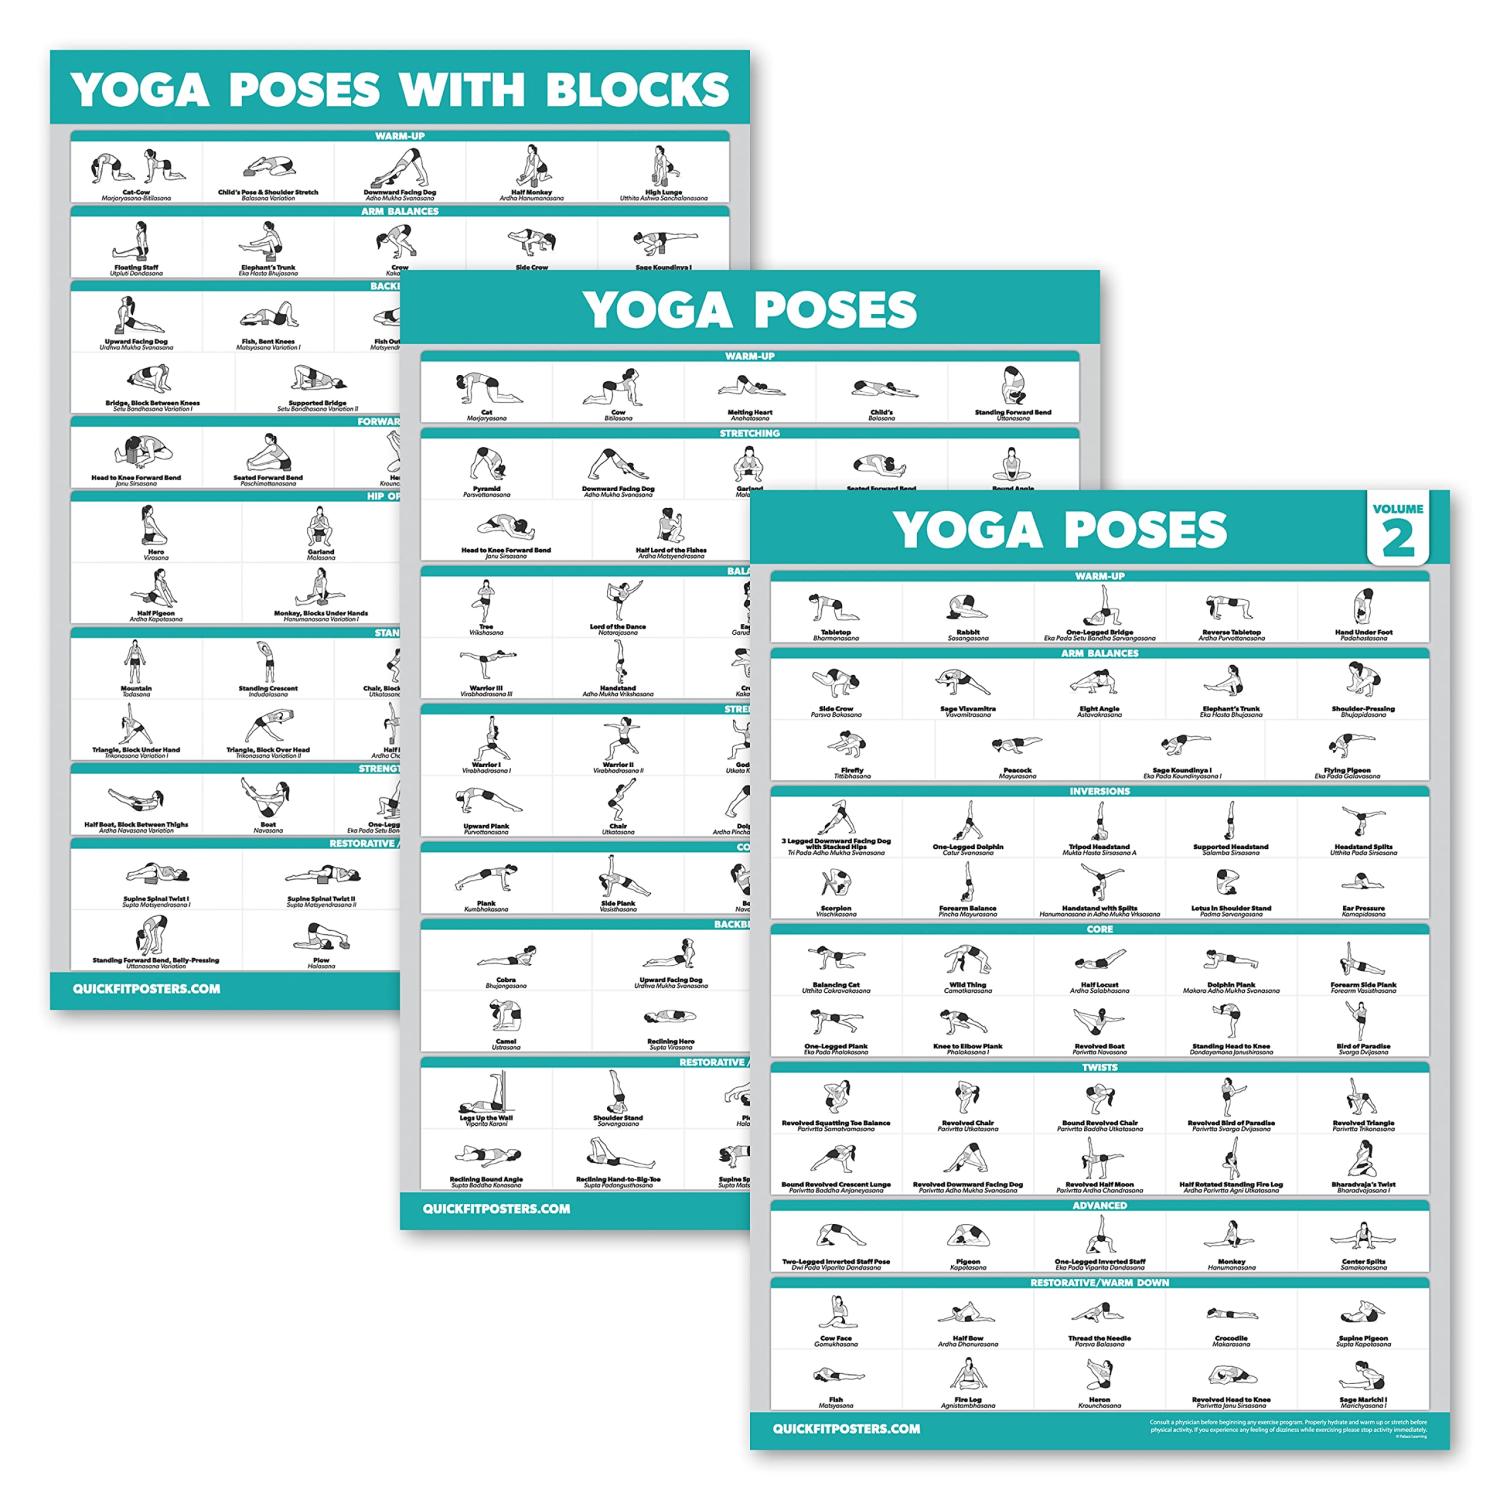 Yoga Block for Kids (Green)